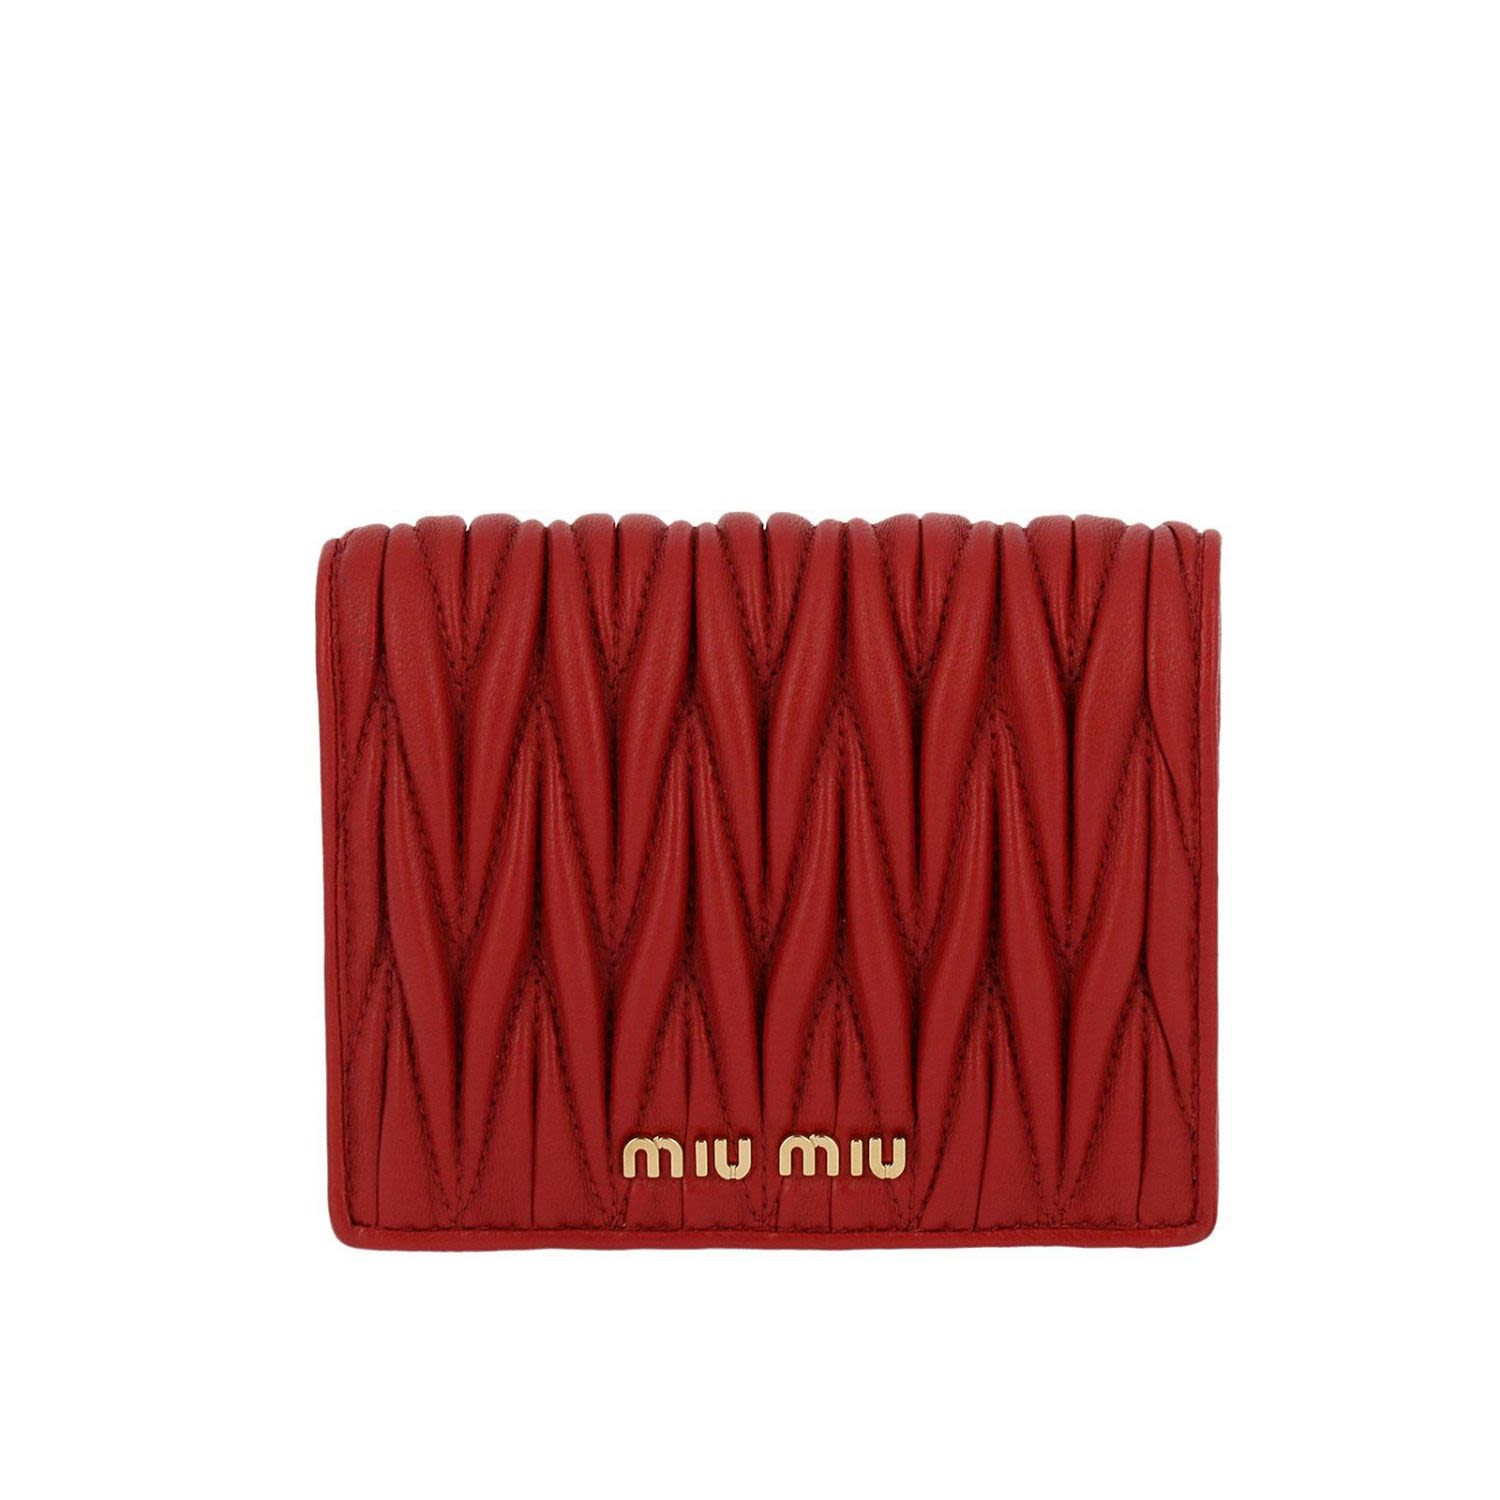 Miu Miu - Wallet Wallet Women Miu Miu - red, Women's Wallets | Italist